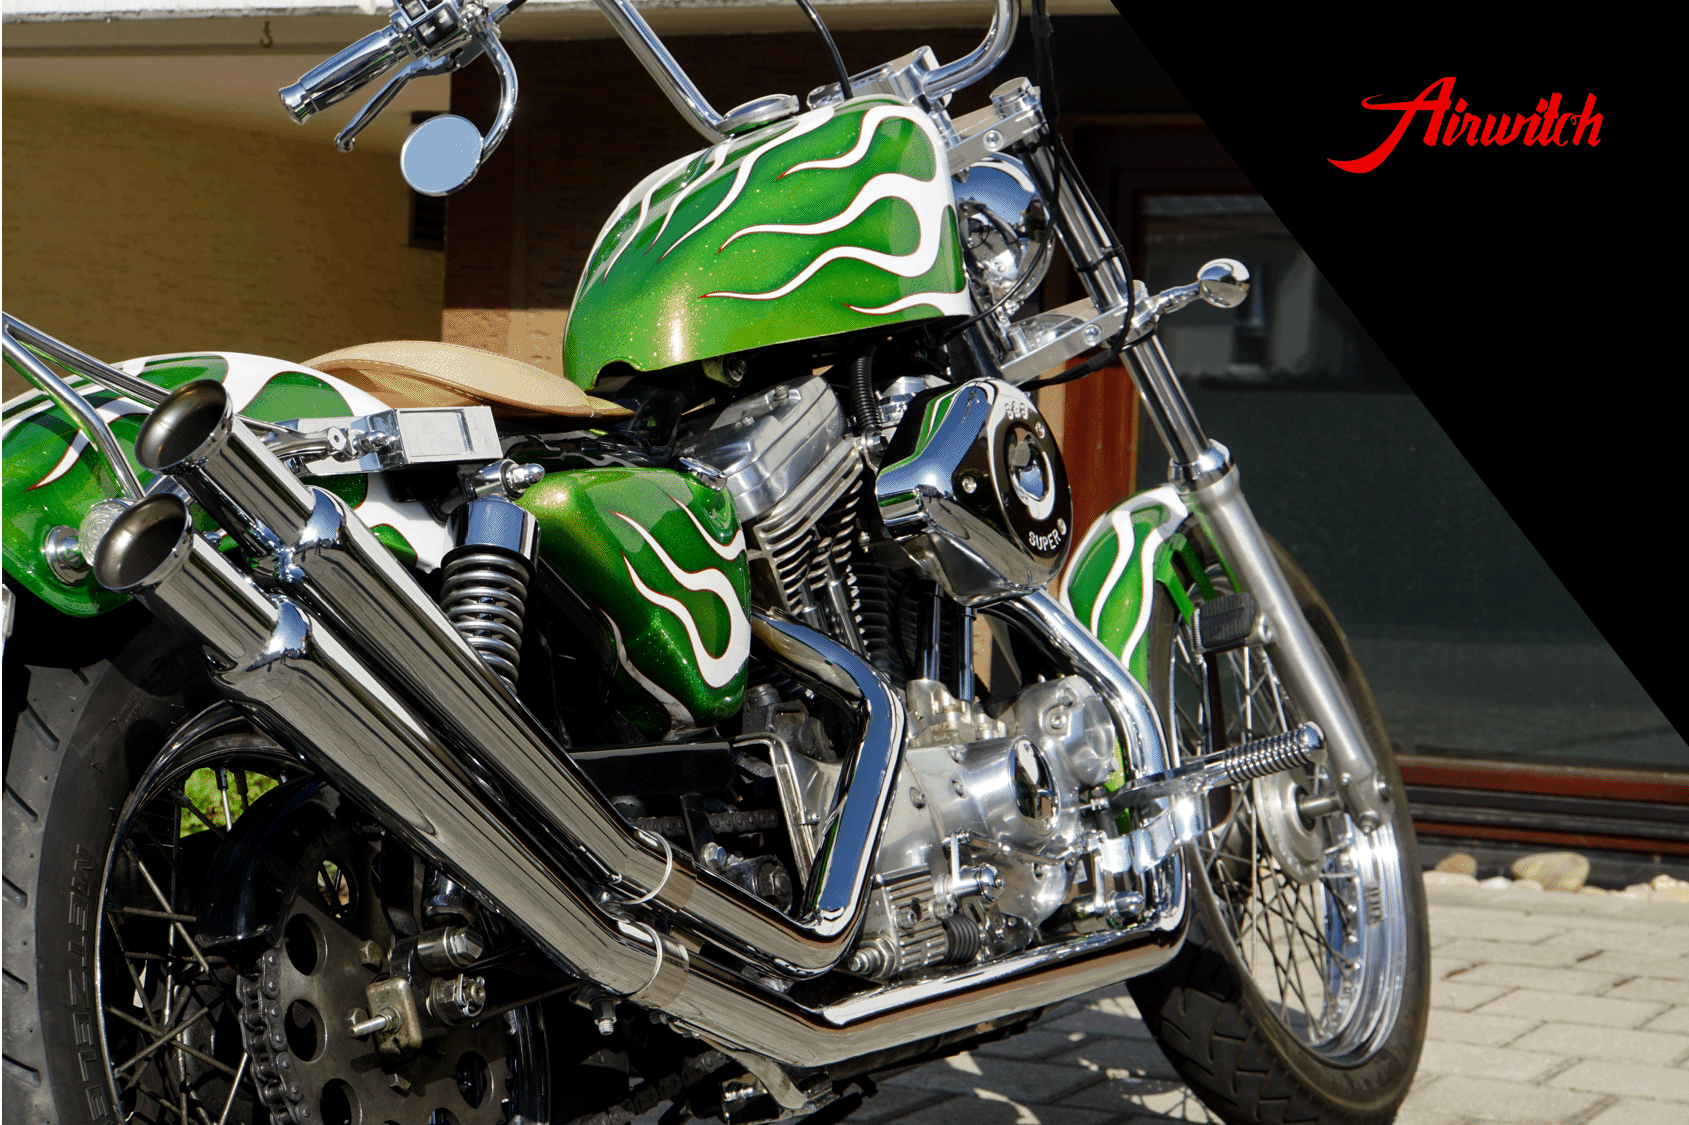 Custom Paint Green Metalflakes Lackierung white Flames Harley Davidson Sportster Tank, Fender